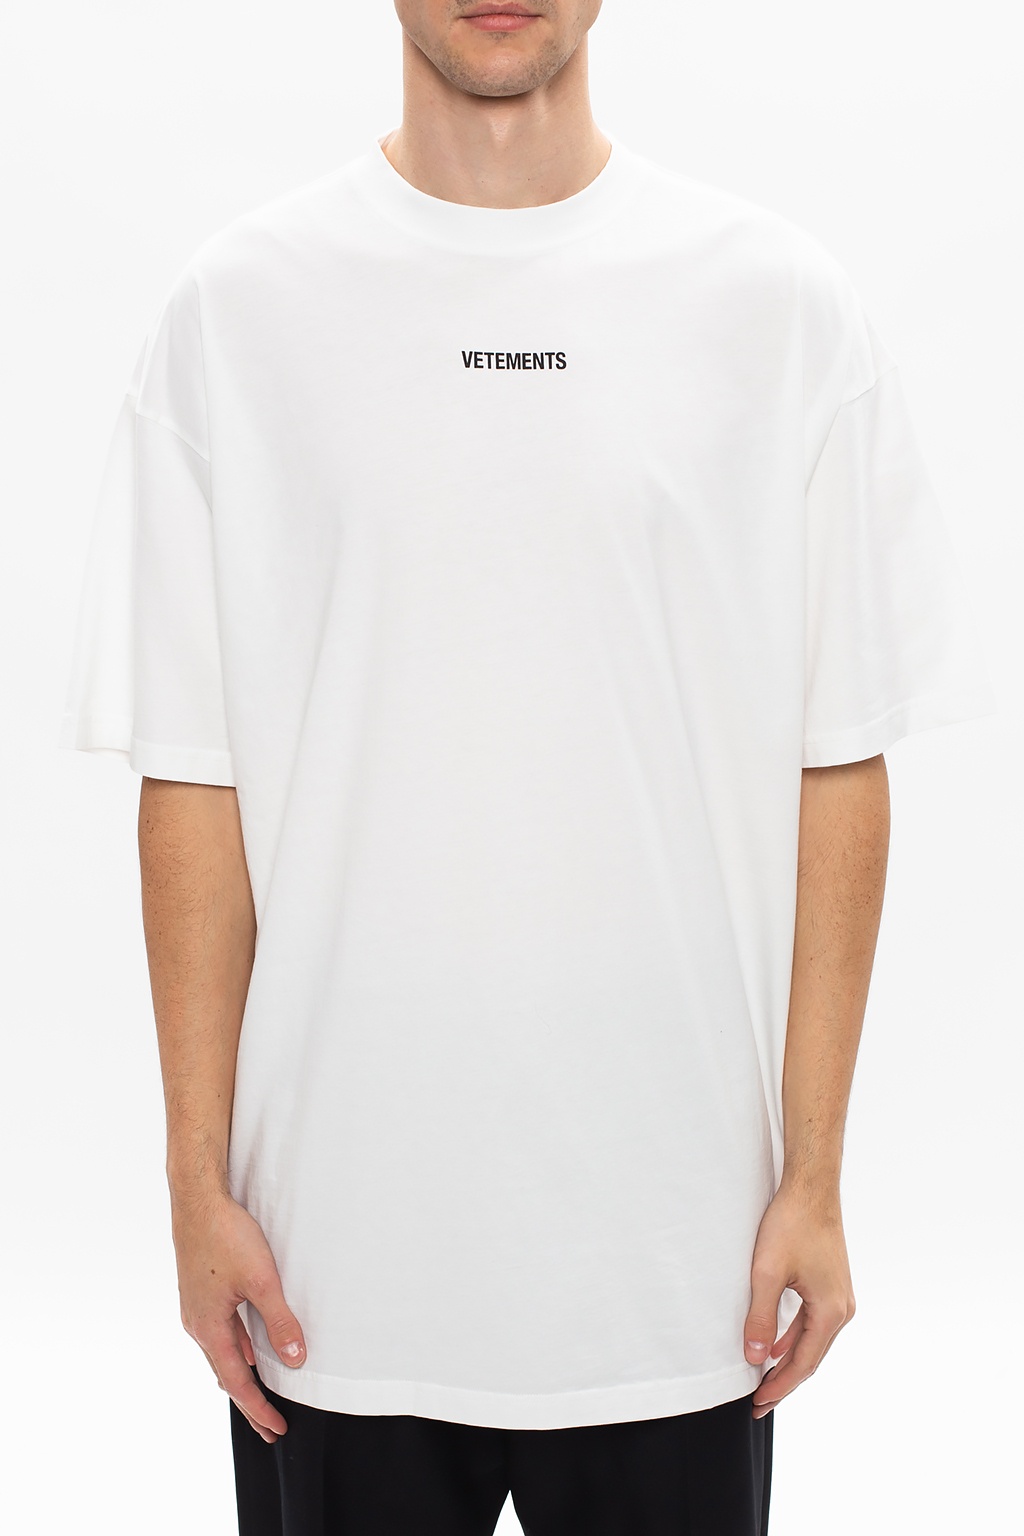 VETEMENTS T-shirt with logo | Men's Clothing | Vitkac